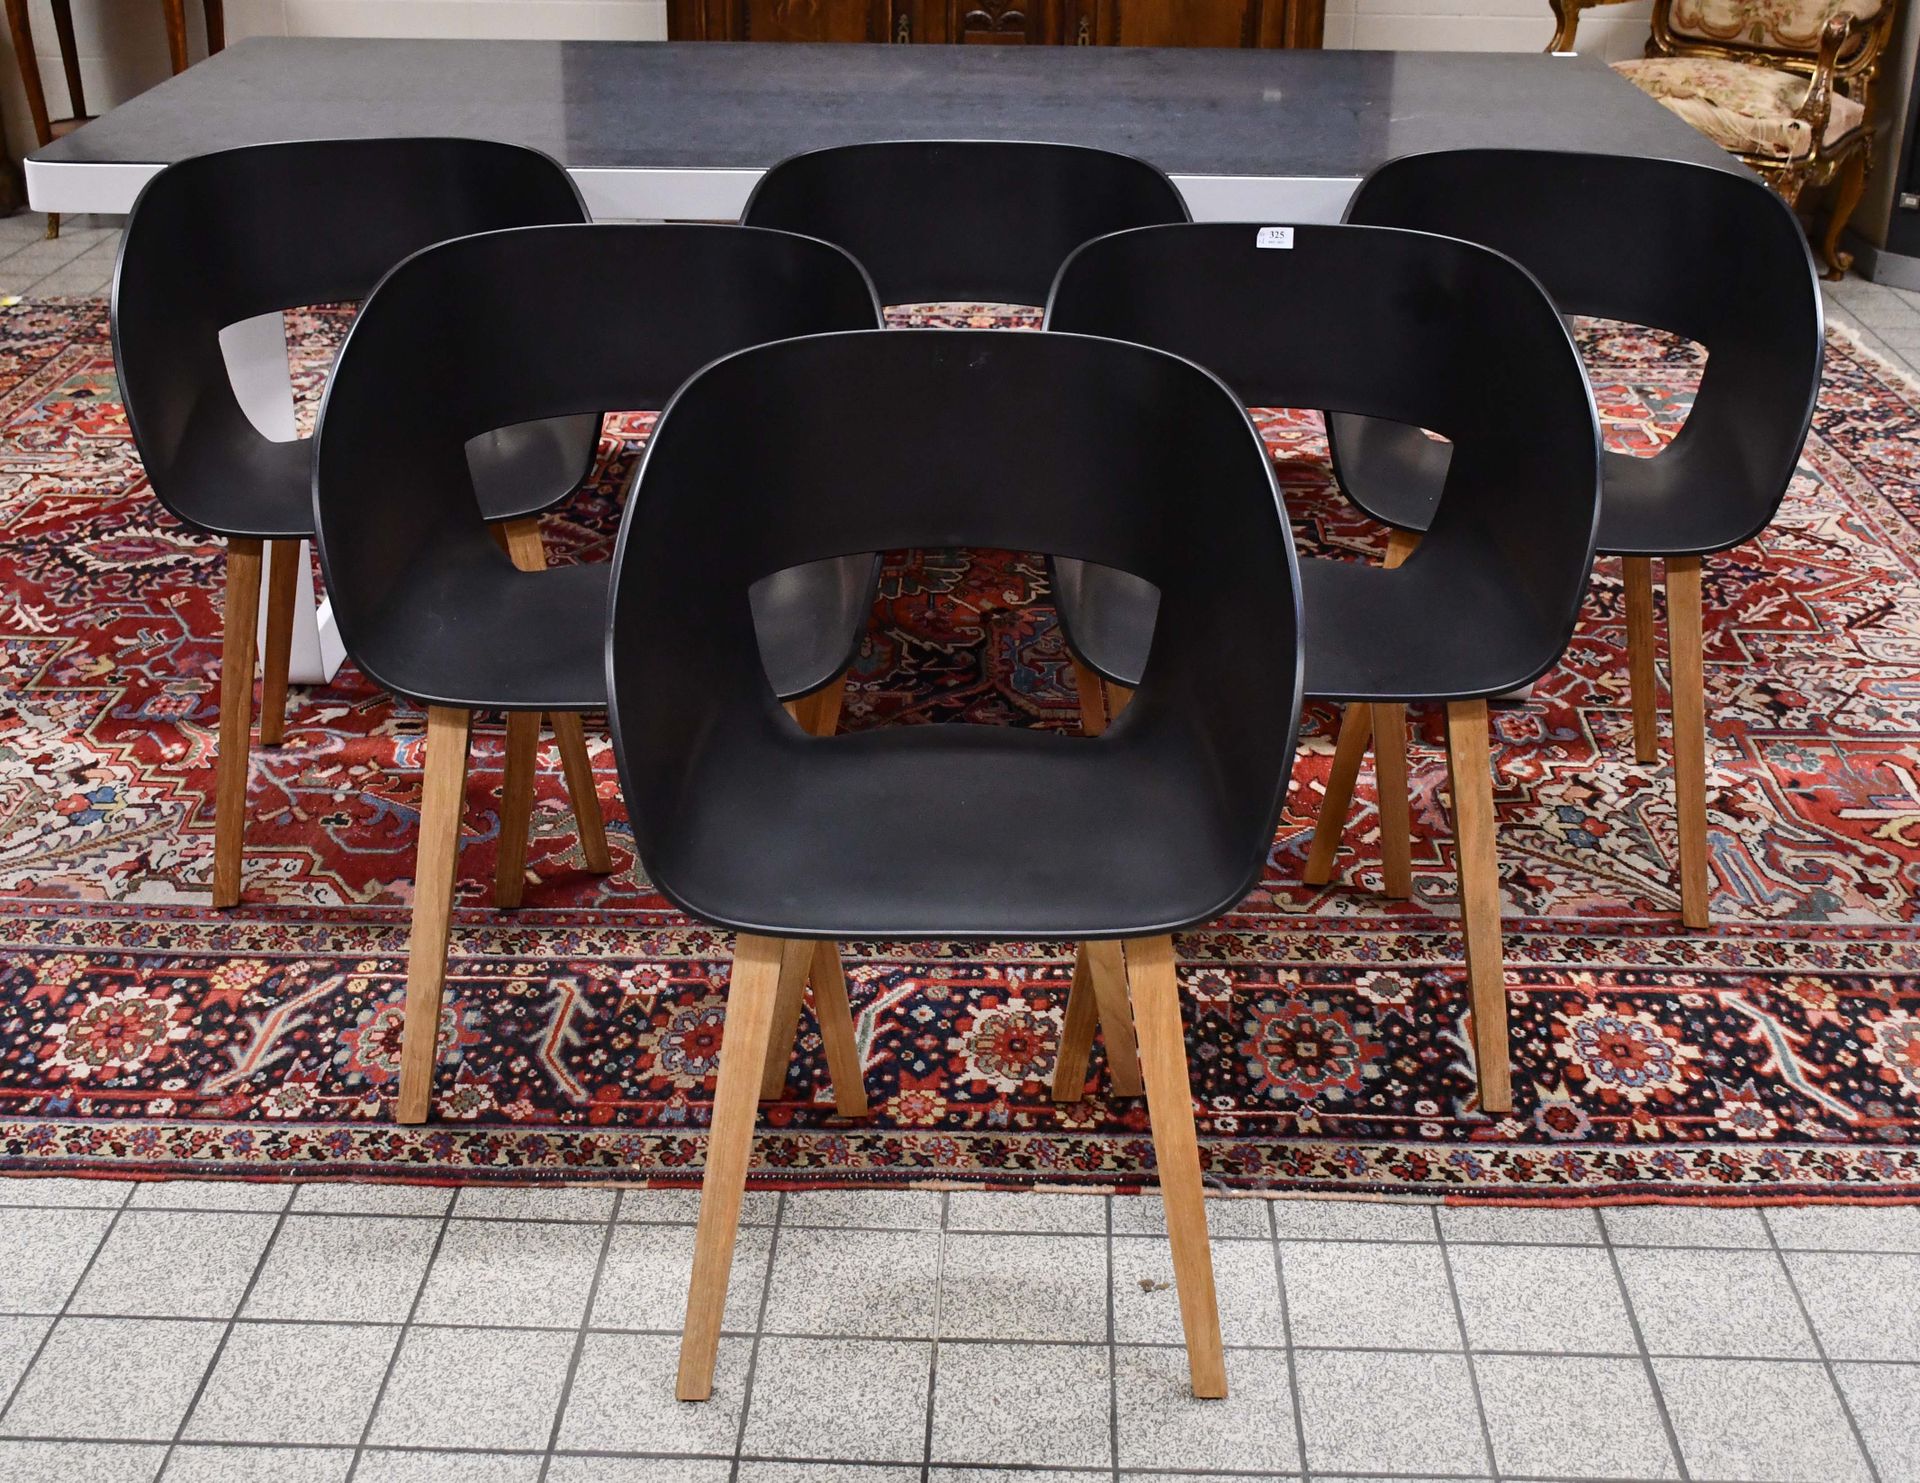 Null 翠布

Neutra "桌子，白色粉末涂层铝和比利时蓝石顶，以及六把扶手椅，黑色外壳和柚木腿。有可能是您选择的黑色桌子。尺寸：220厘米×100厘米。